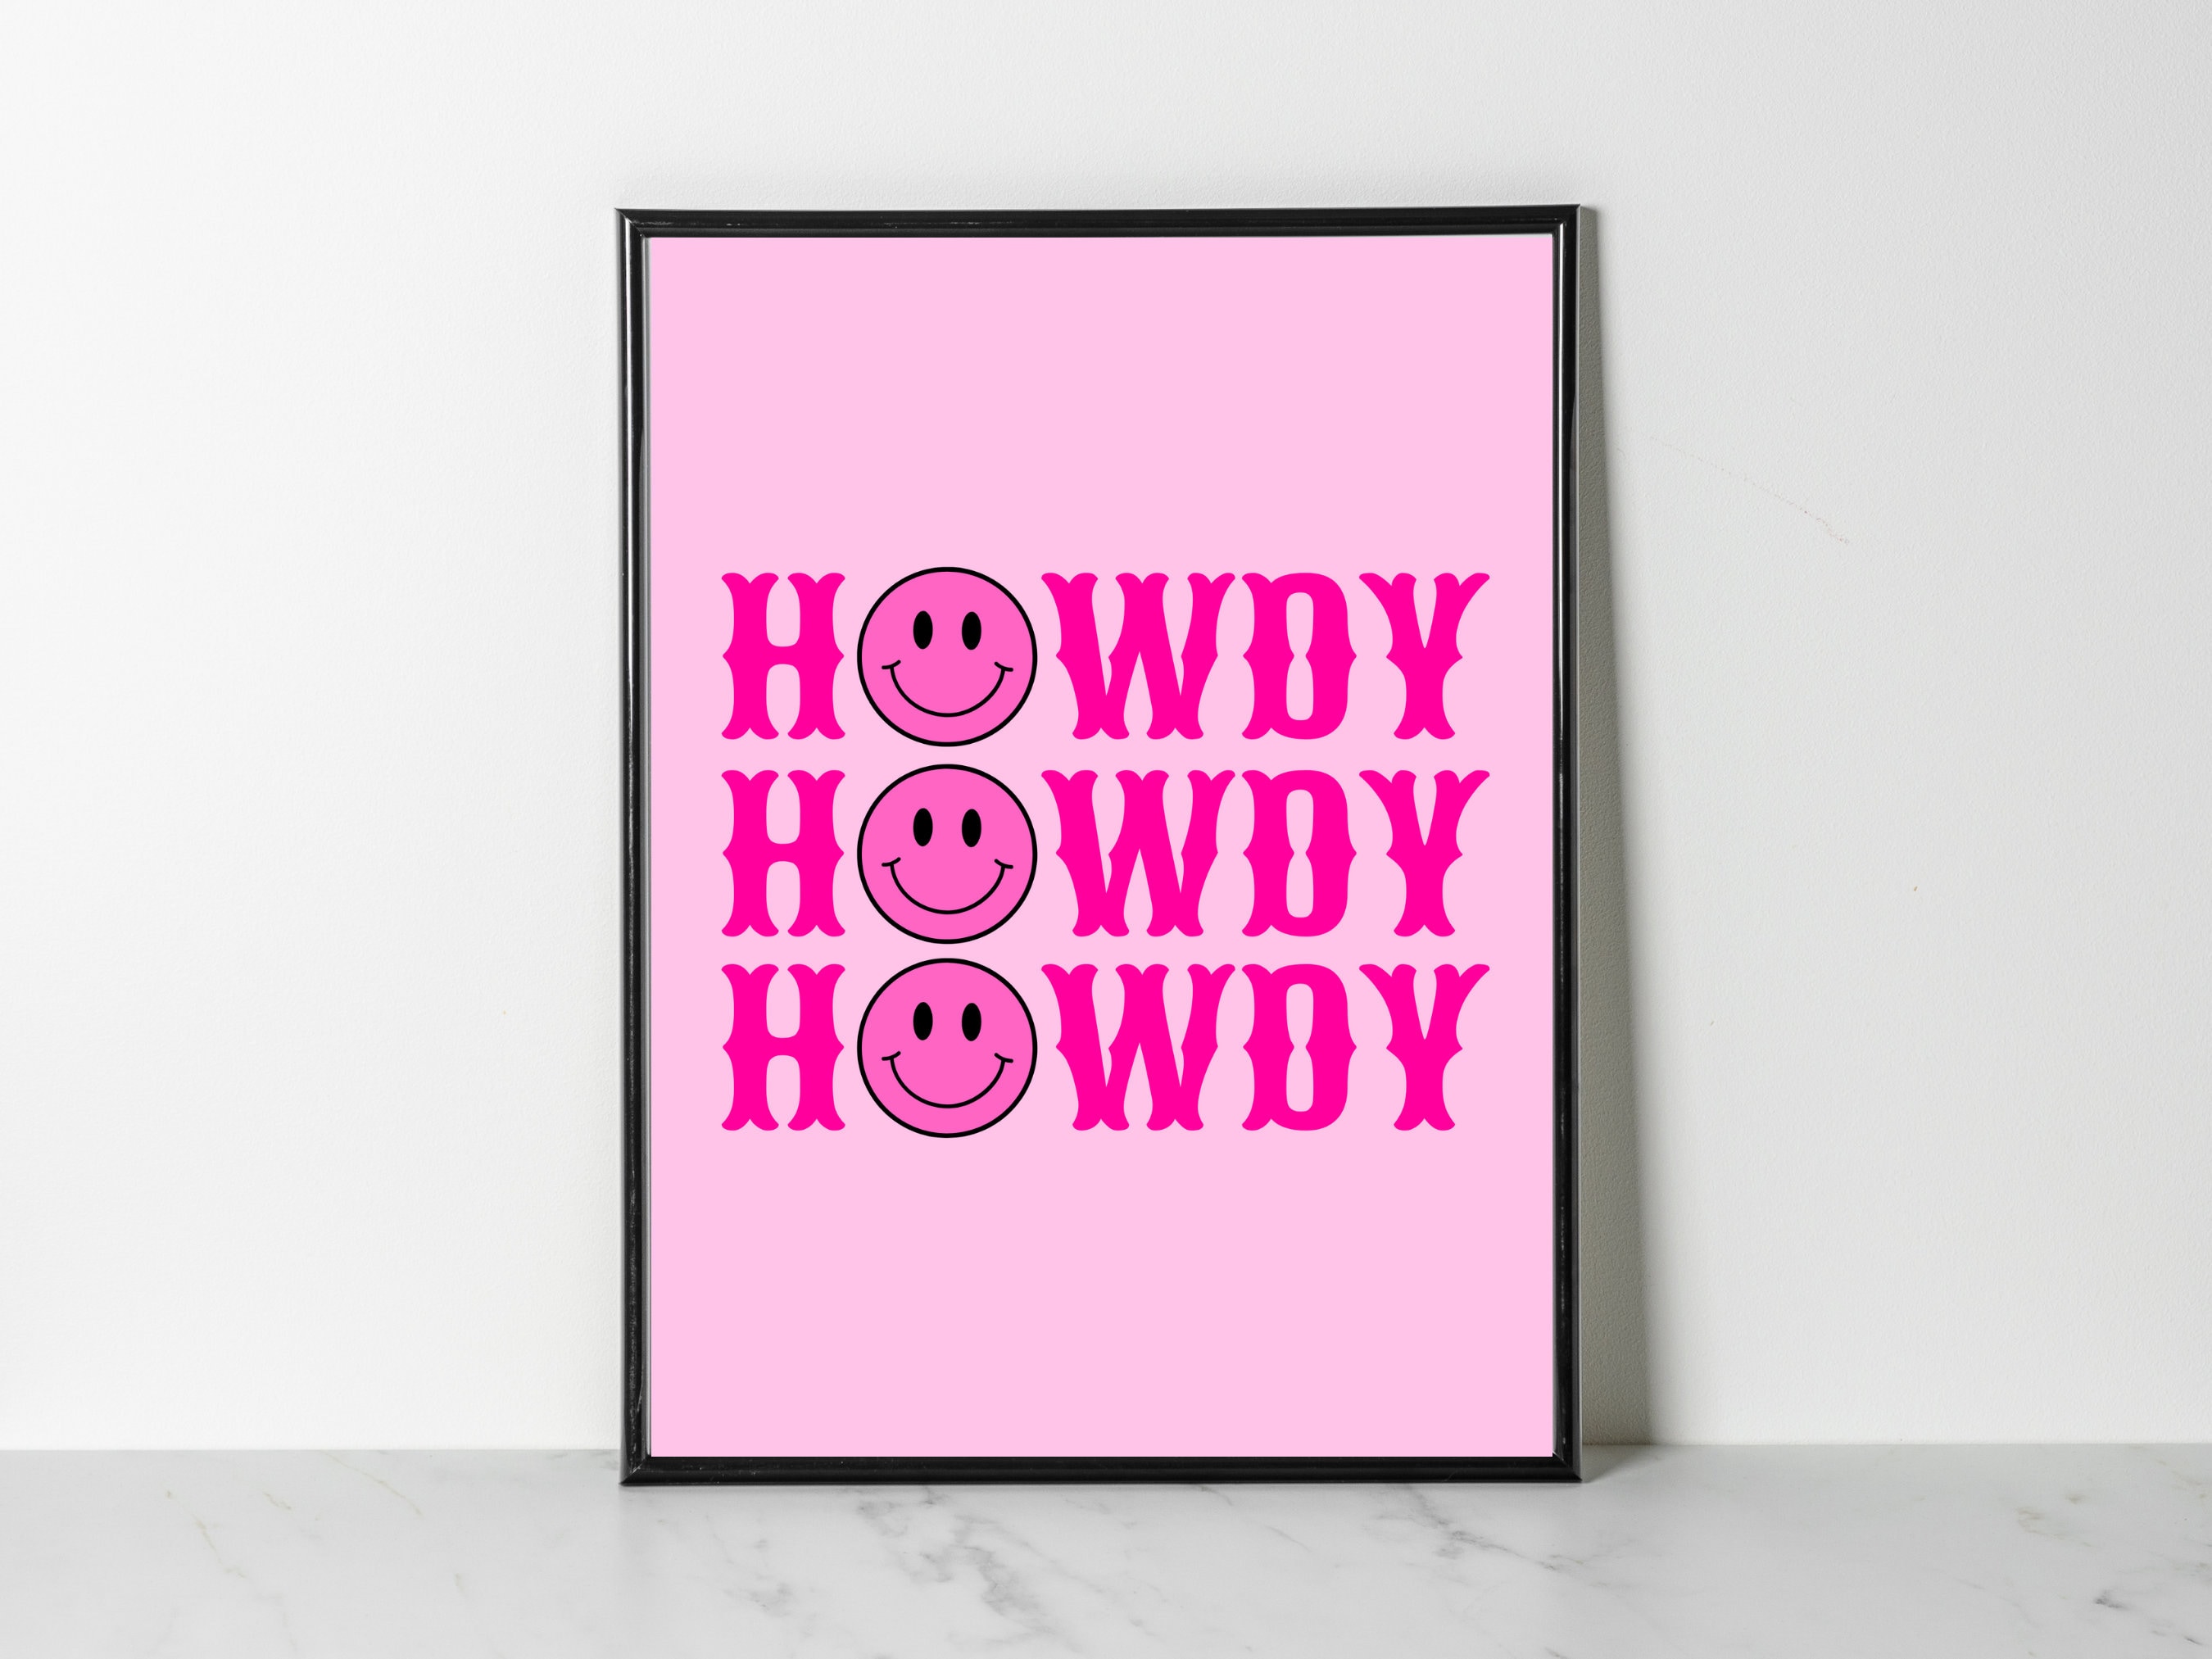 Cowboy// Cowgirl // Howdy Smiley Preppy Digital Print in Pink